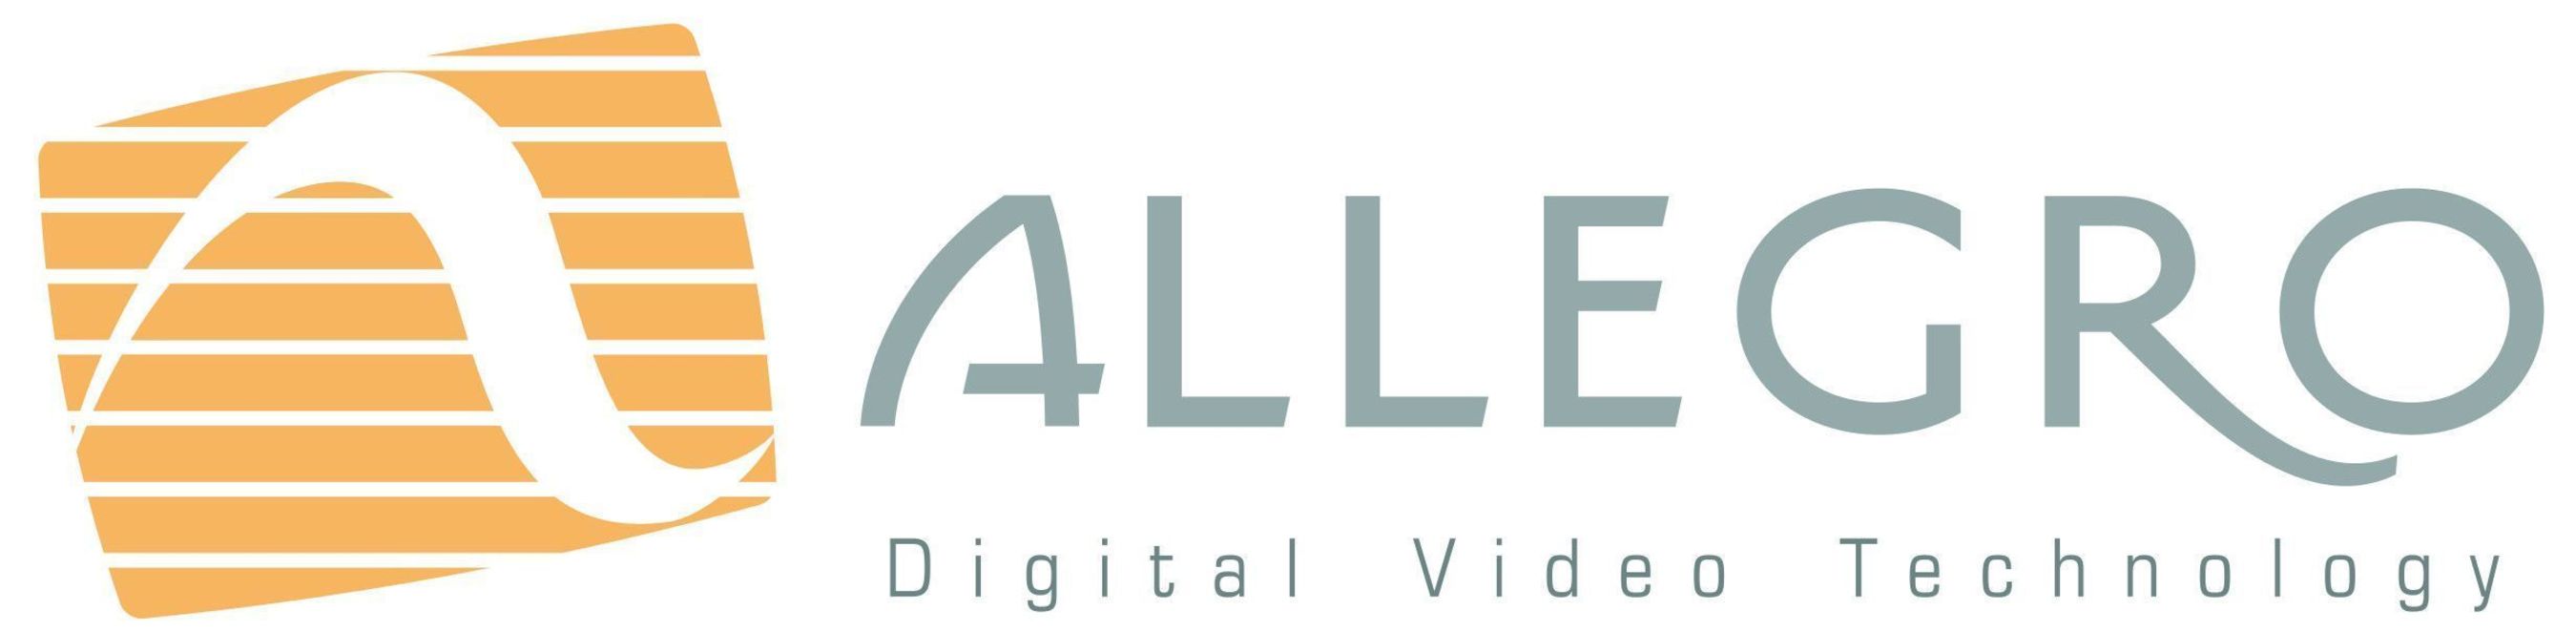 ALLEGRO Digital Video Technology Logo (PRNewsFoto/ALLEGRO DVT)